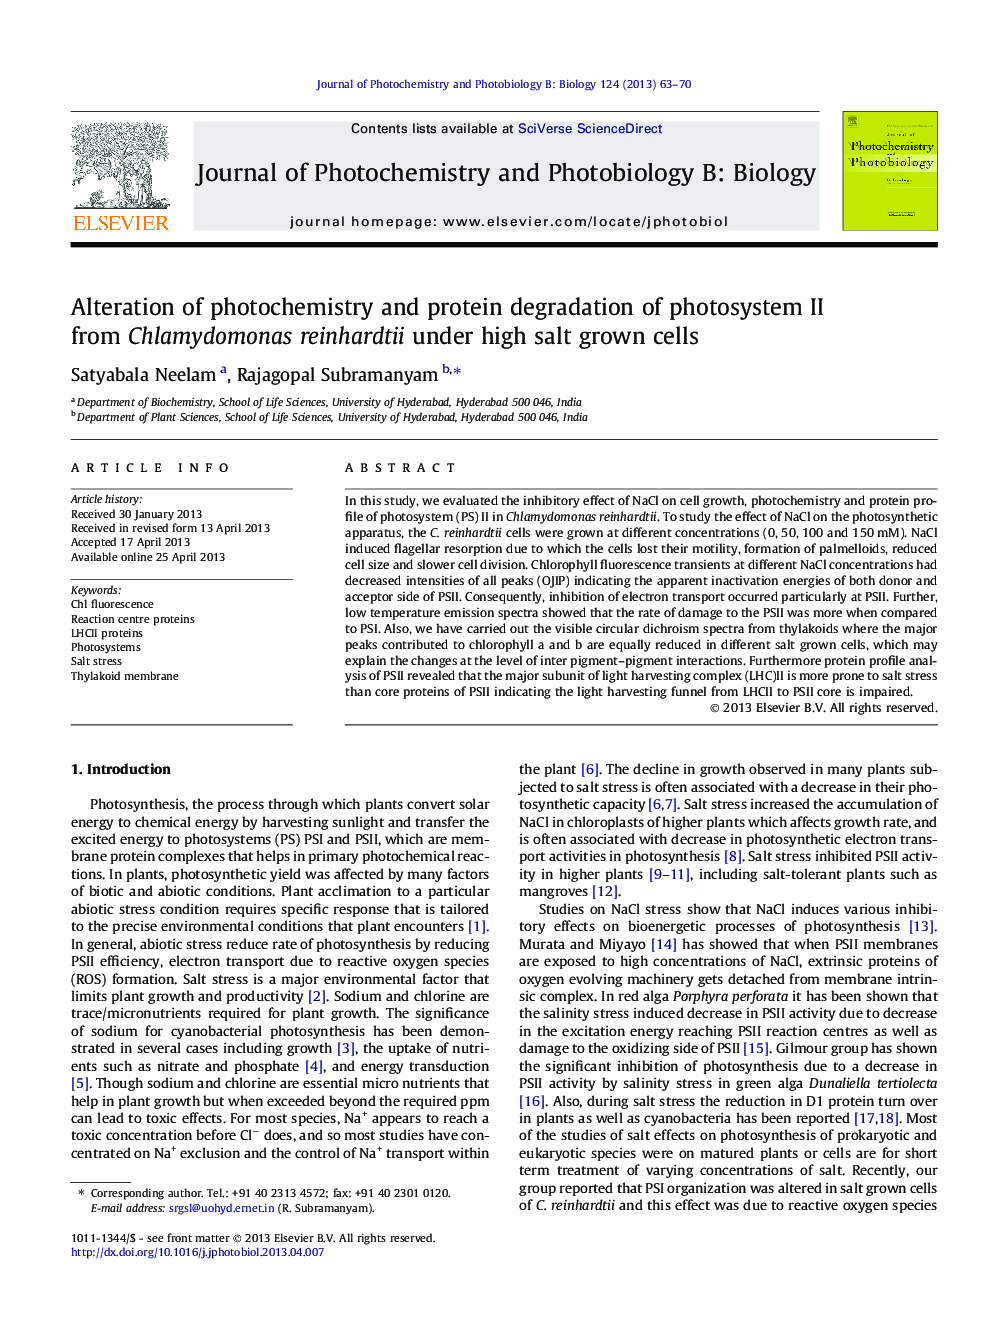 Alteration of photochemistry and protein degradation of photosystem II from Chlamydomonas reinhardtii under high salt grown cells